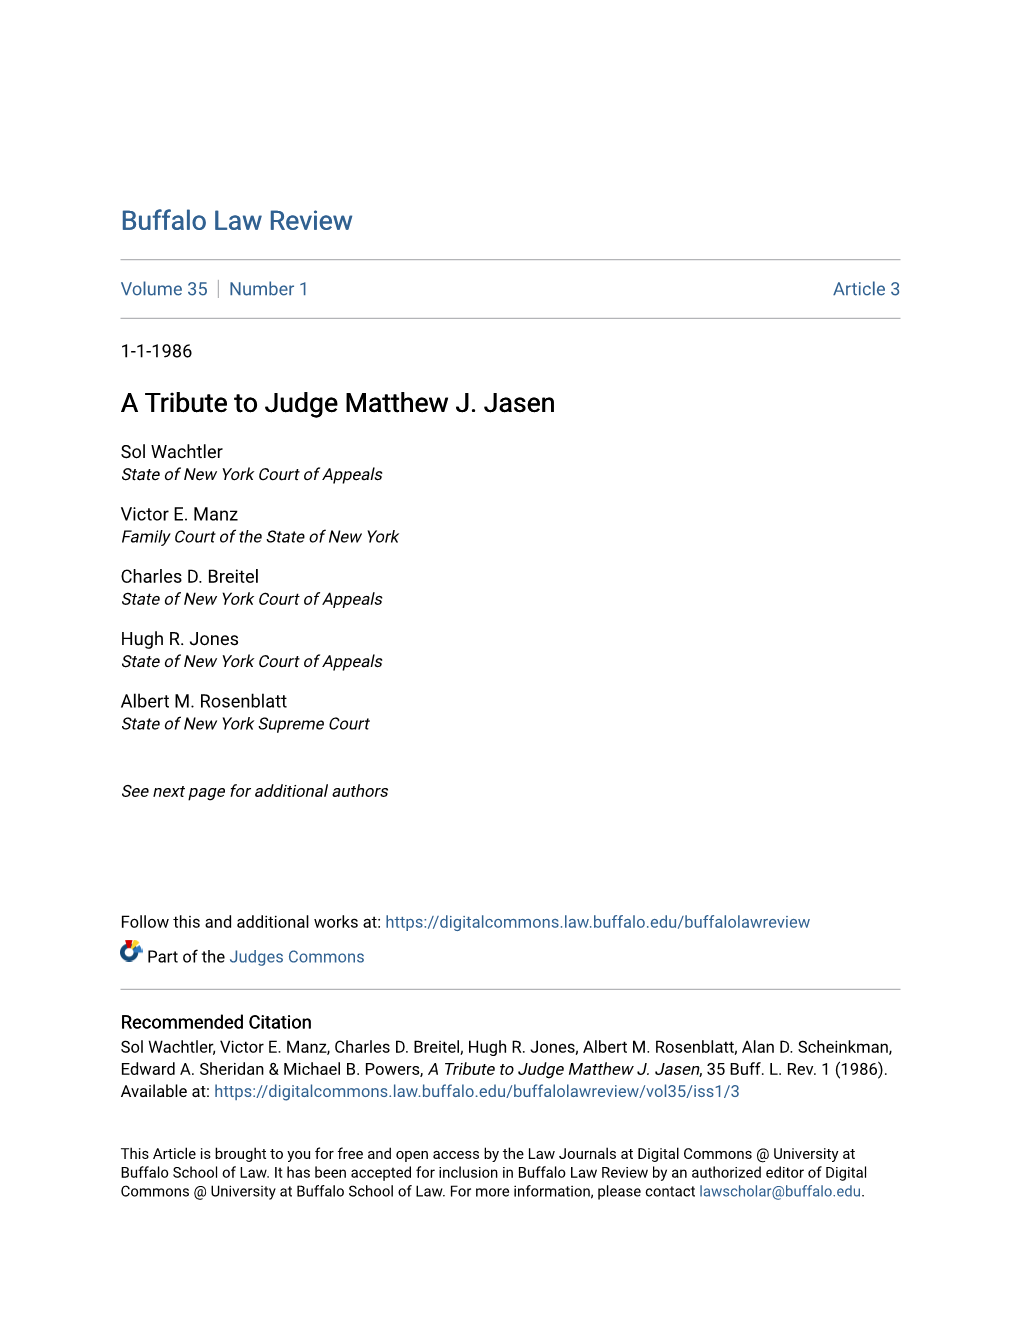 A Tribute to Judge Matthew J. Jasen